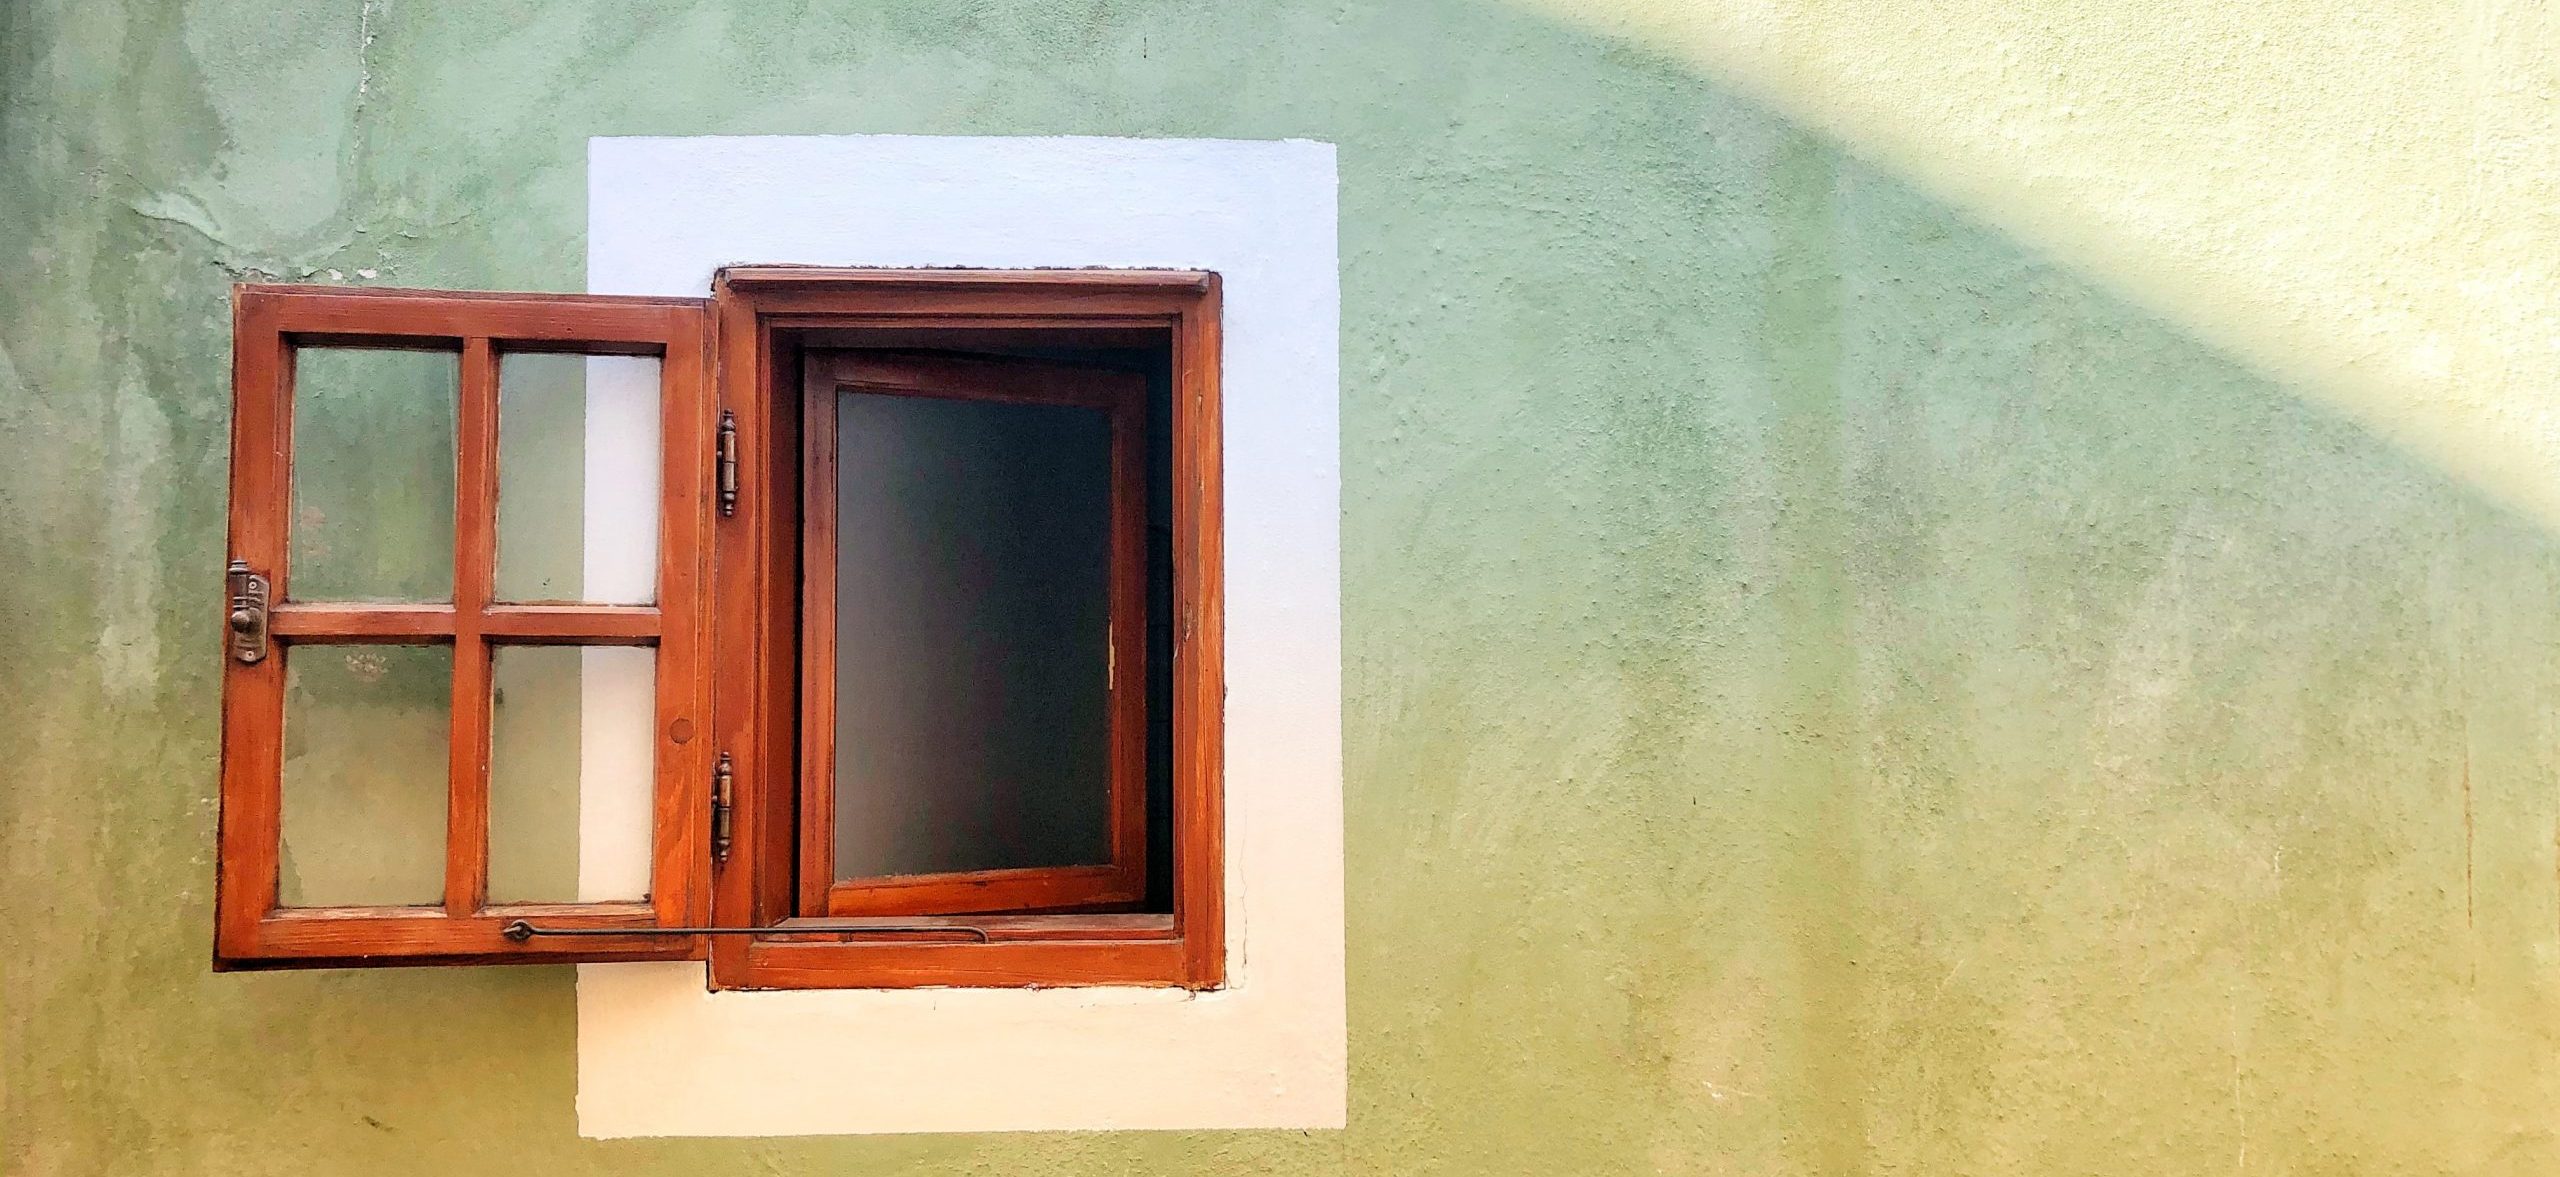 Photo of an open window